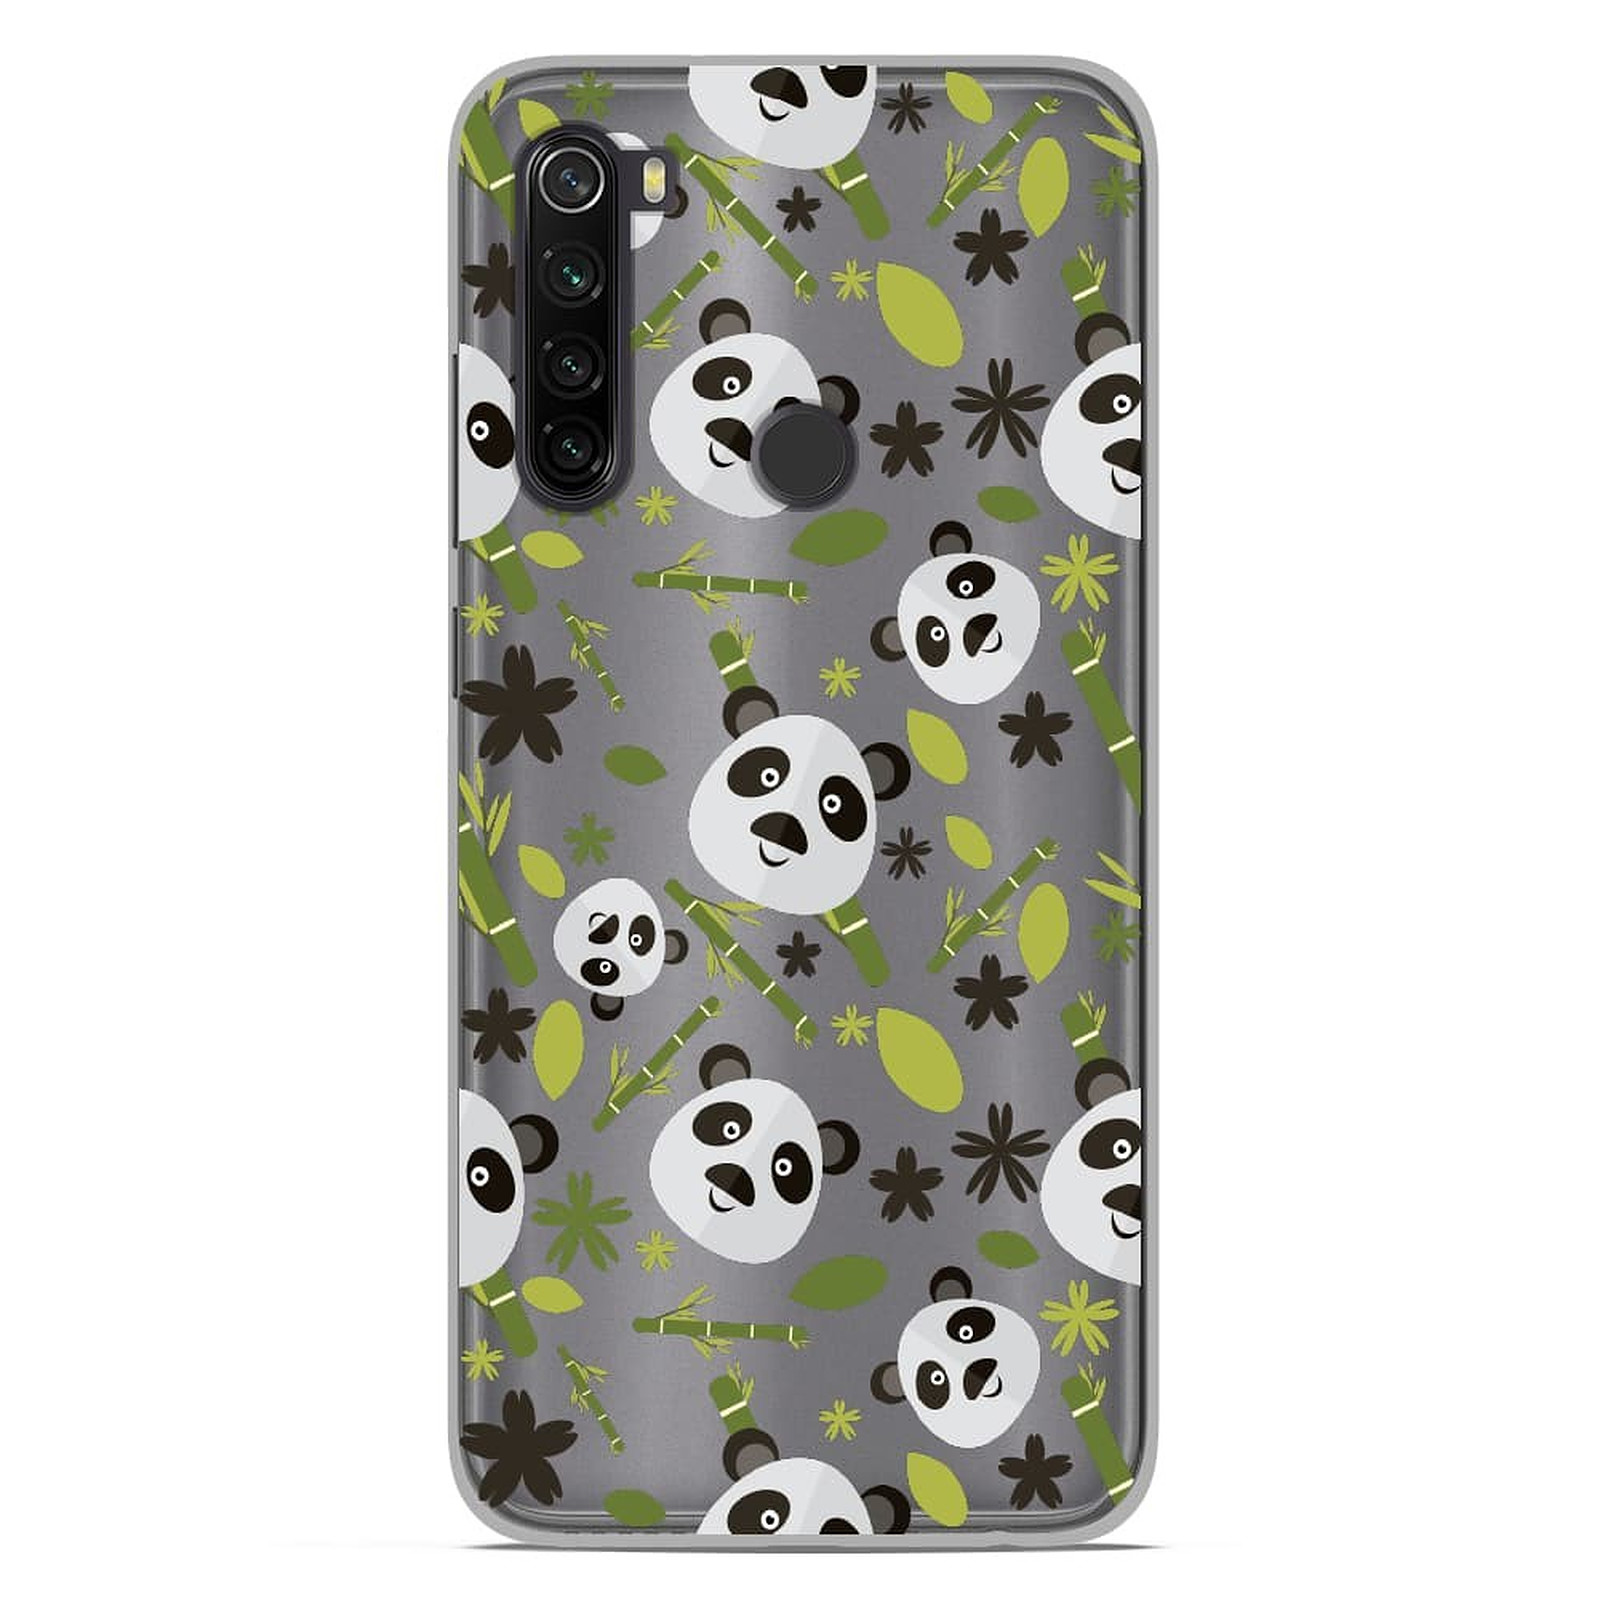 1001 Coques Coque silicone gel Xiaomi Redmi Note 8 motif Pandas et Bambou - Coque telephone 1001Coques